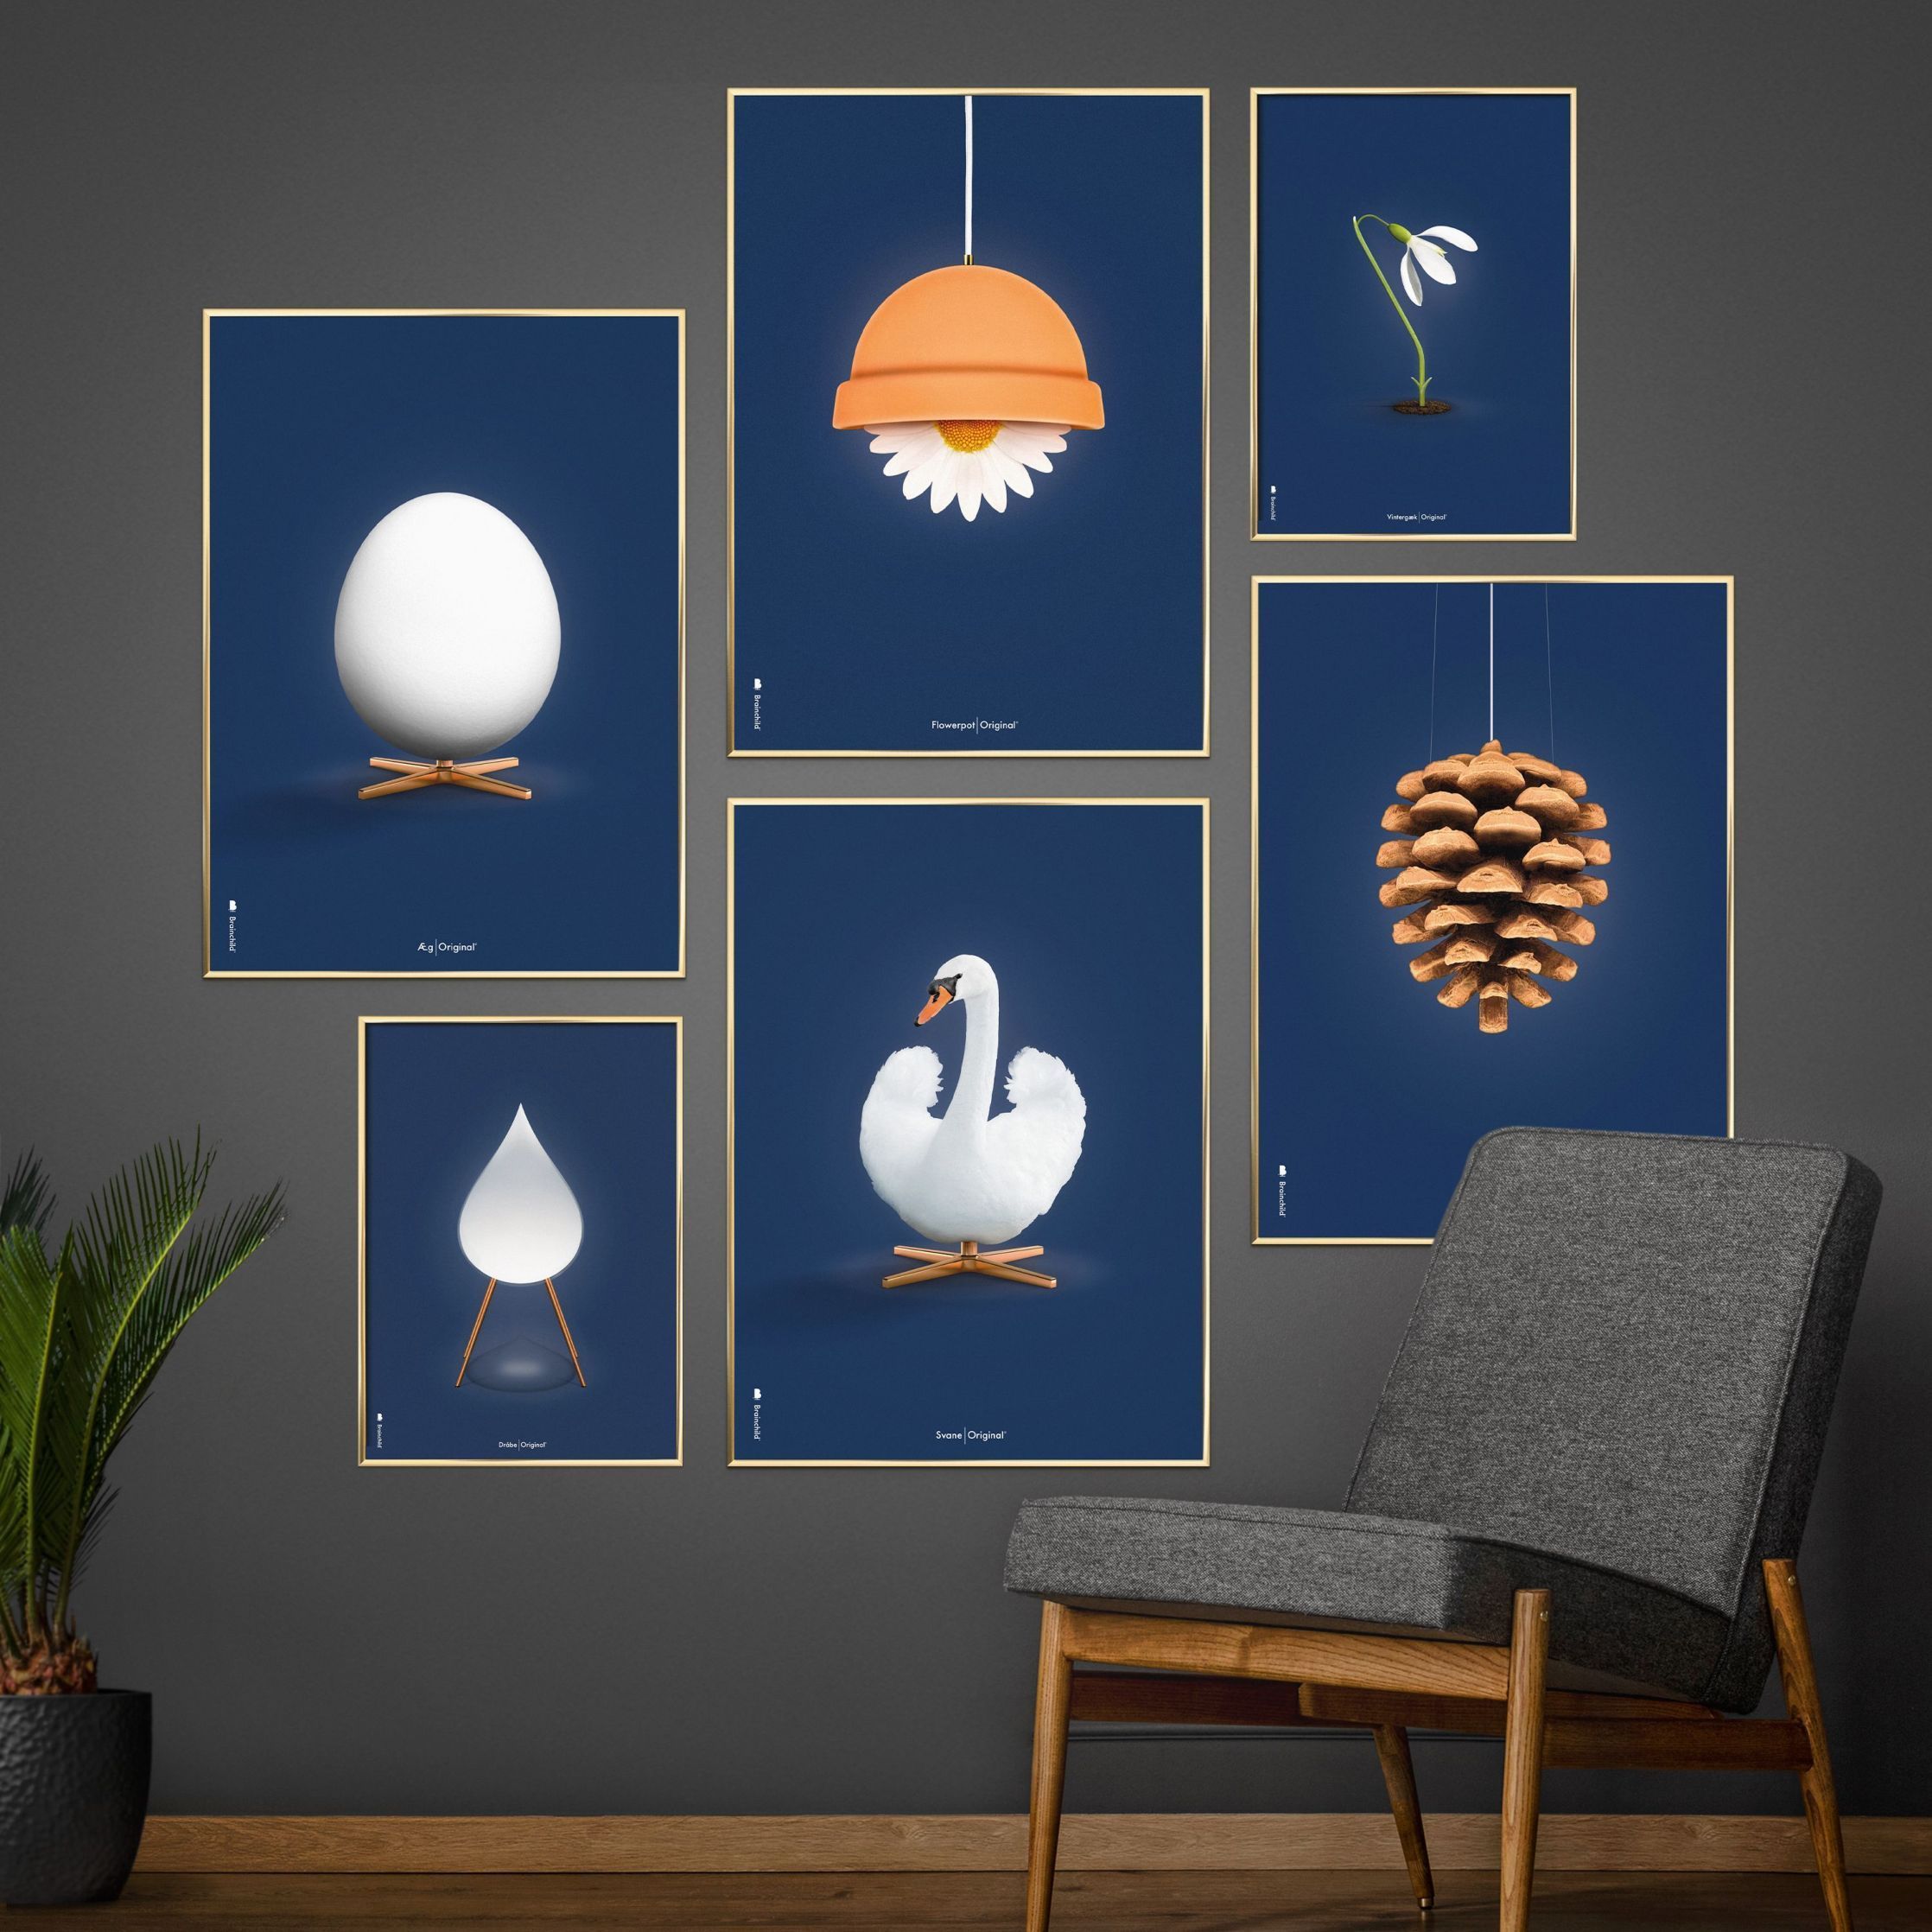 Brainchild Swan Classic Poster Without Frame 70 X100 Cm, Dark Blue Background